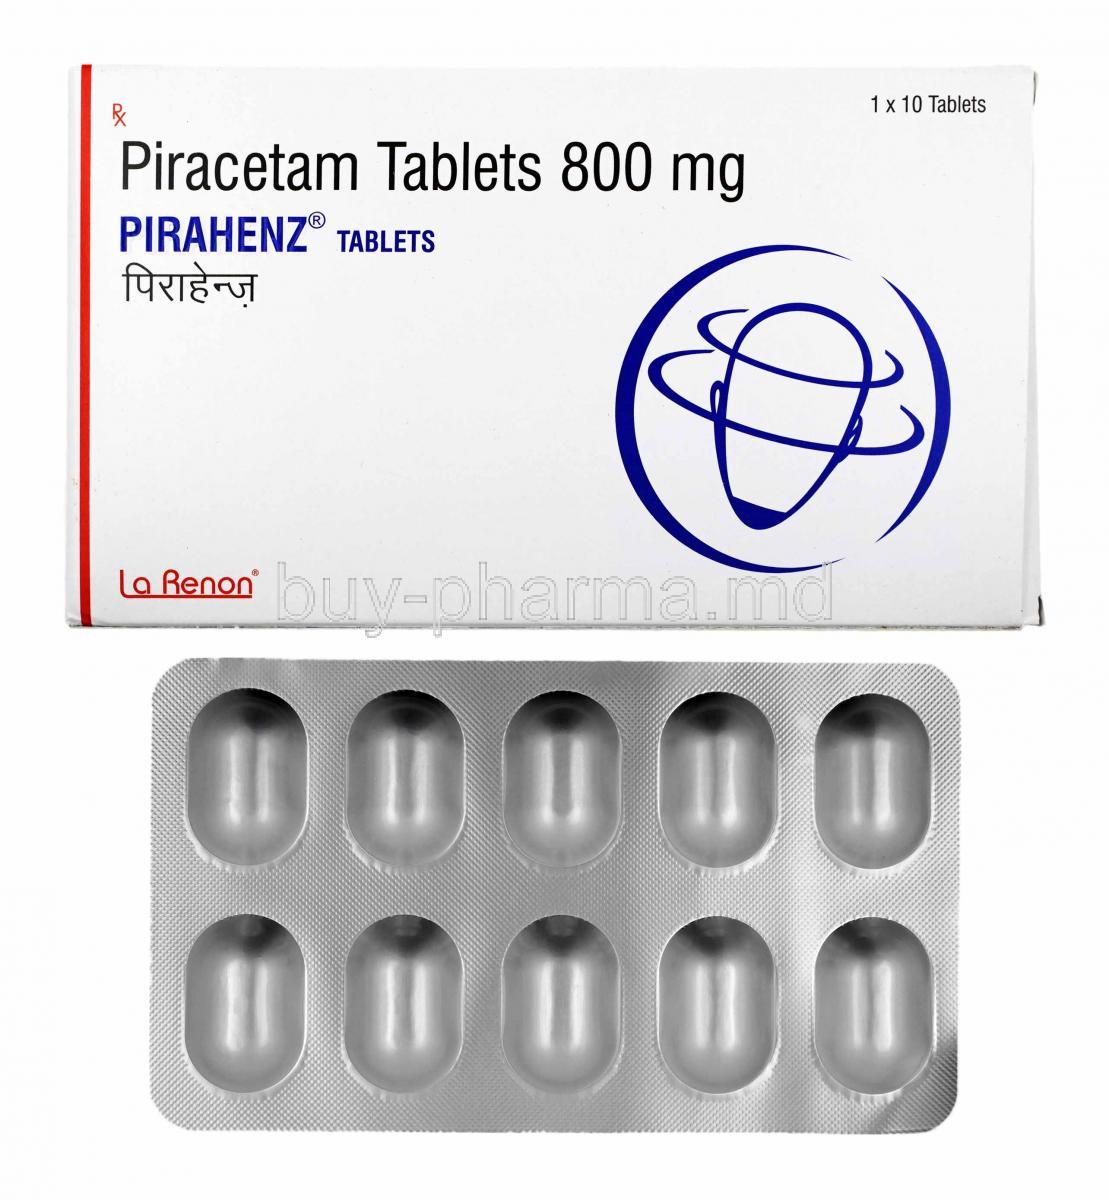 Pirahenz, Piracetam box and tablets